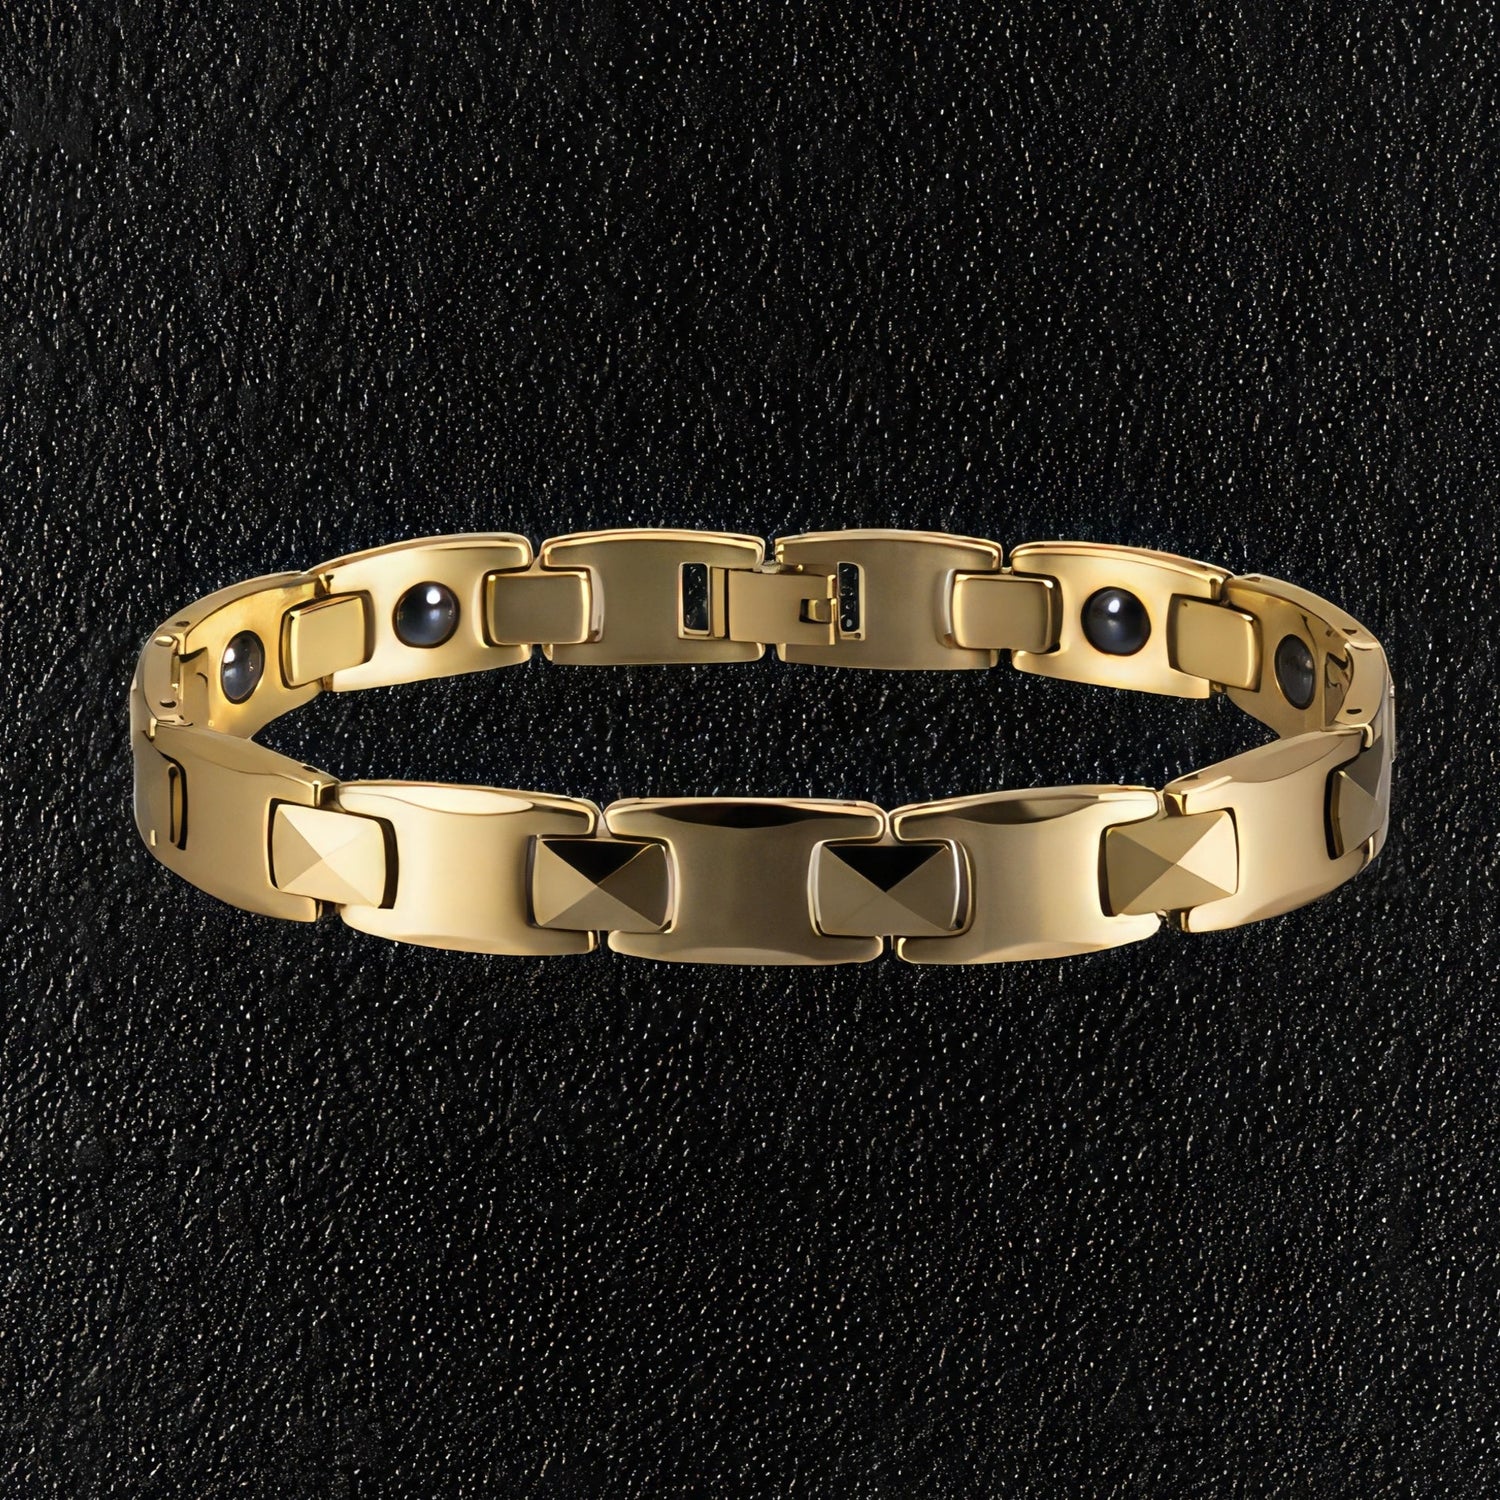 67501 Cartier Vintage Fidelity 18k Yellow Gold Flat Link Bracelet | eBay